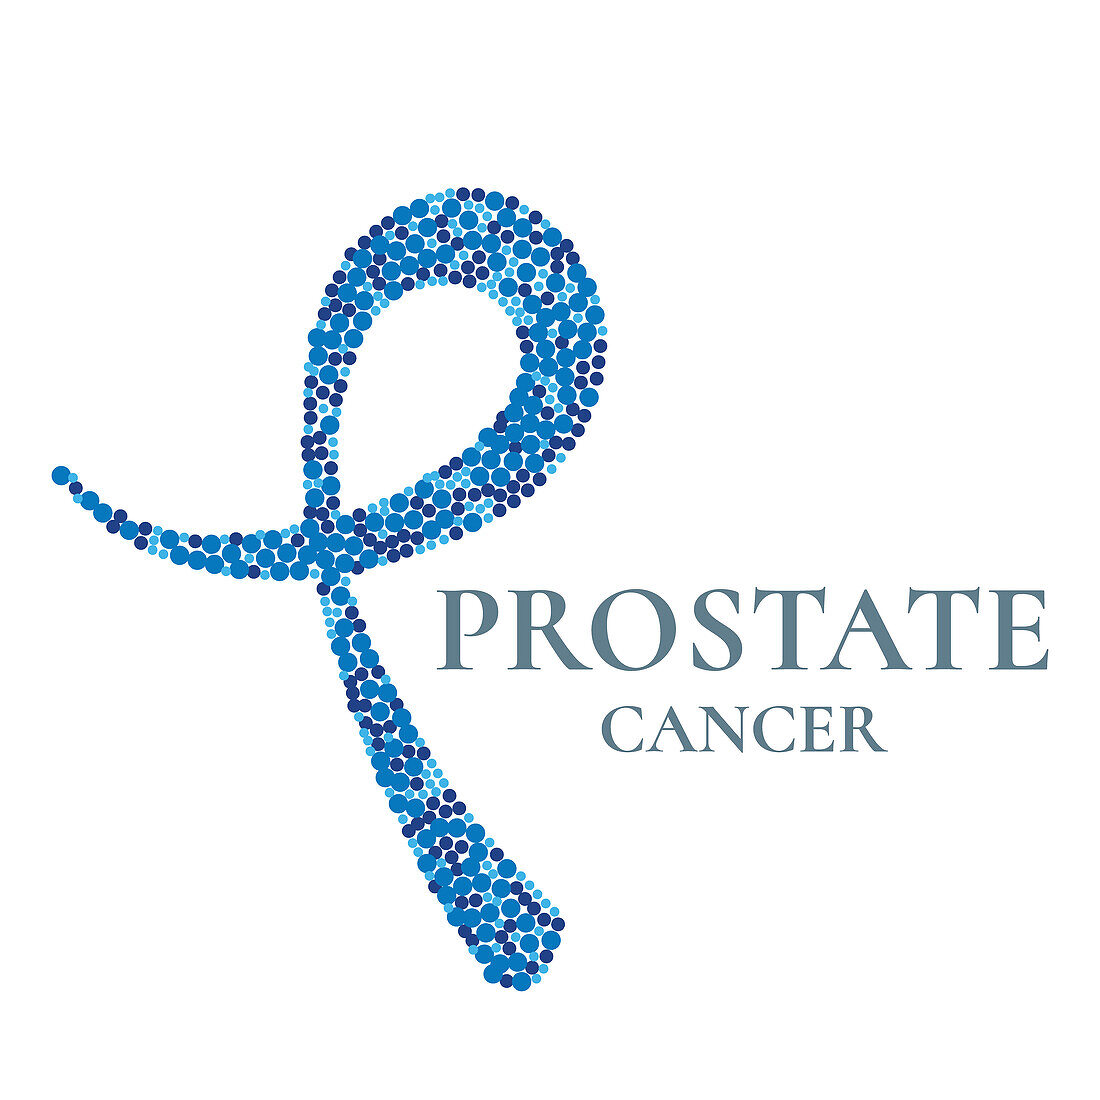 Prostate cancer awareness ribbon, conceptual illustration